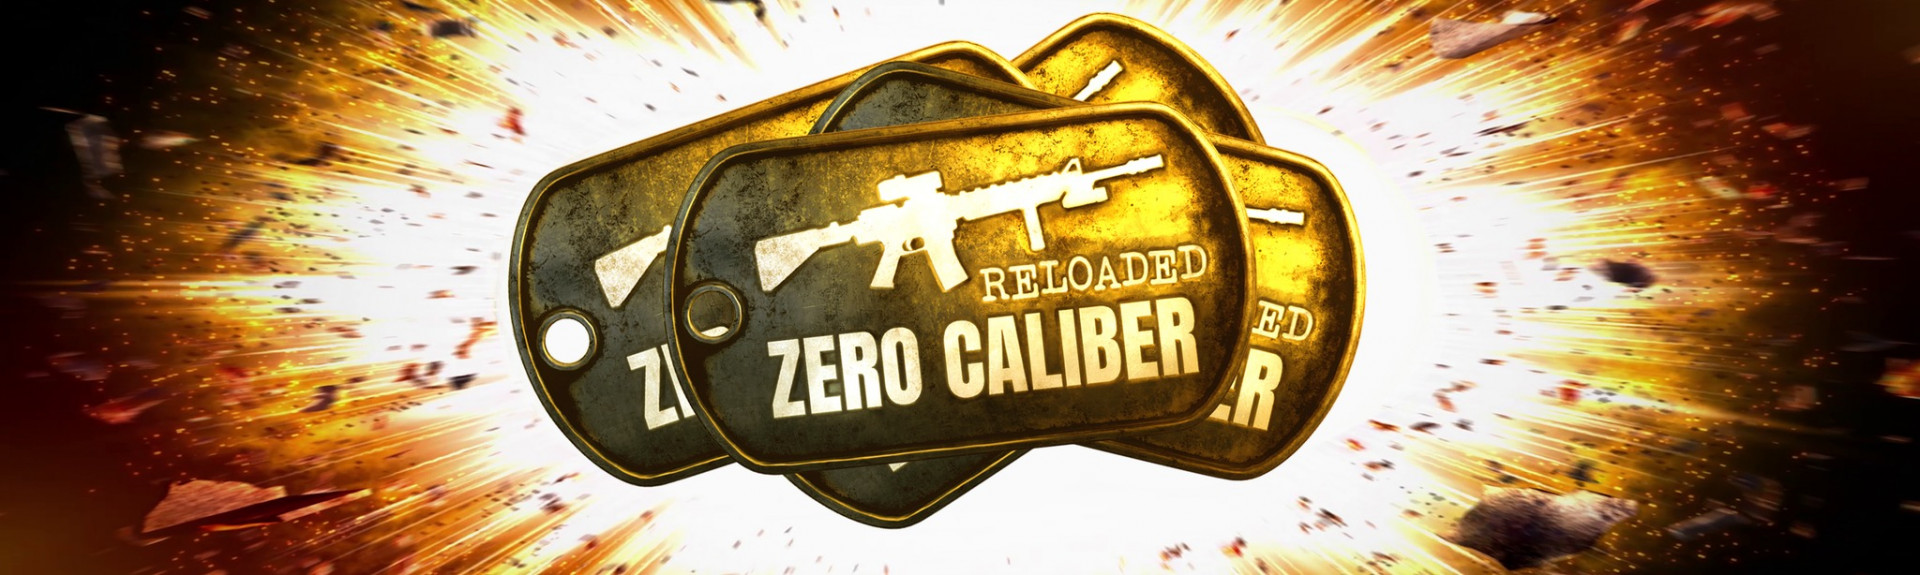 Zero Caliber: Reloaded - ANÁLISIS